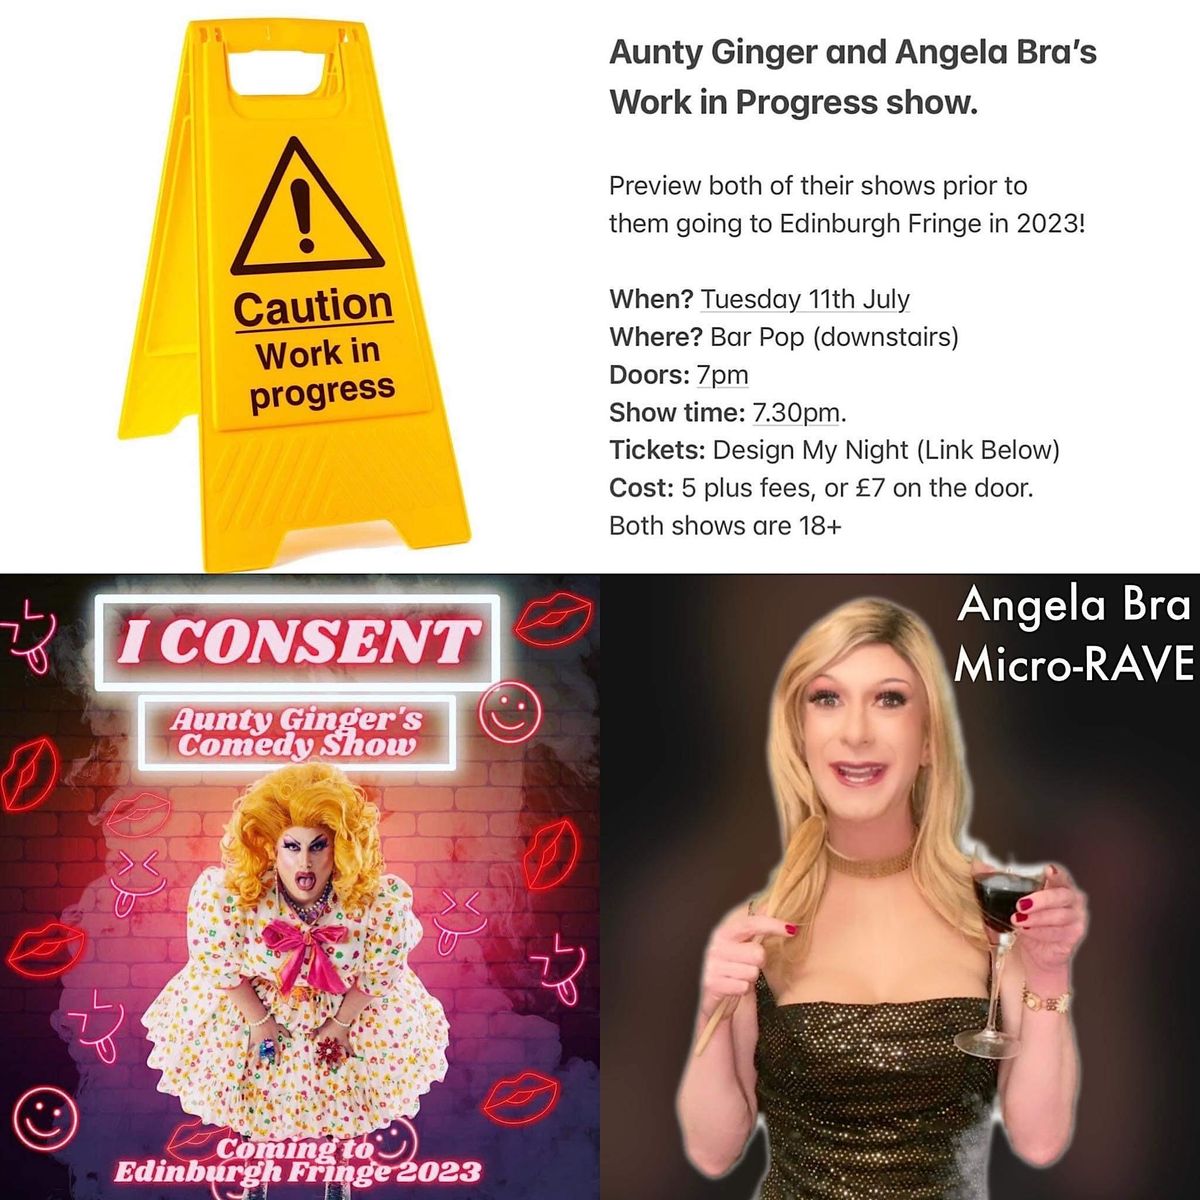 Angela Bra and Aunty Ginger - Ed Fringe - Work in Progress Shows